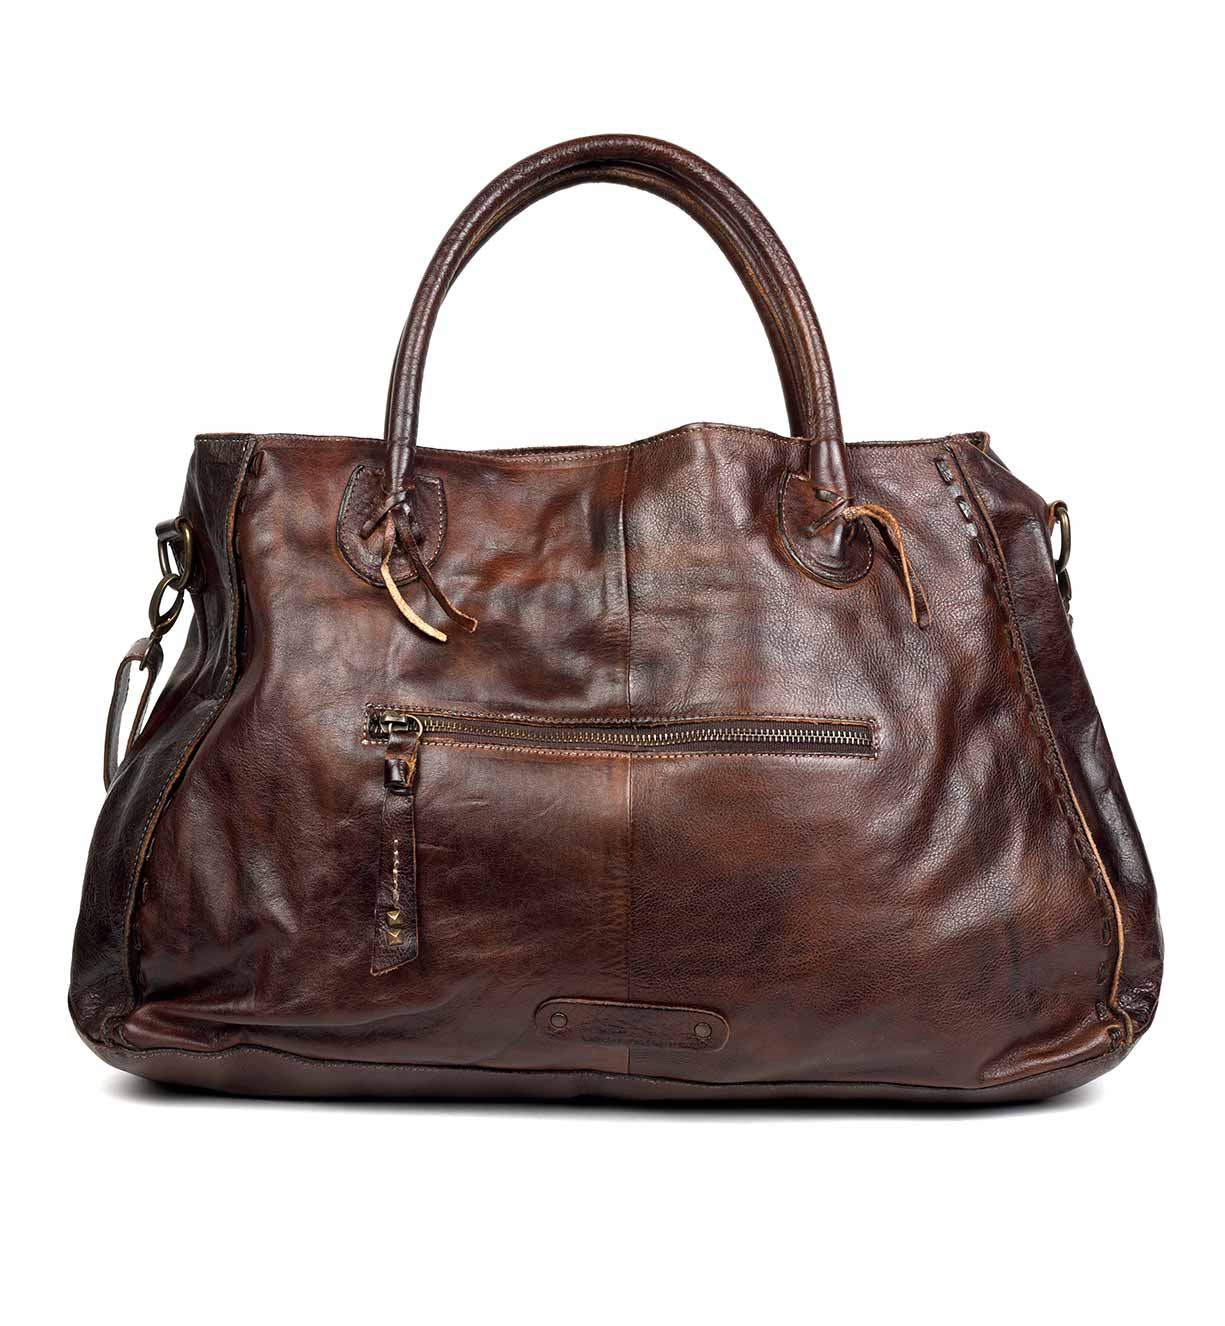 An image of a Rockaway handbag by Bed Stu.